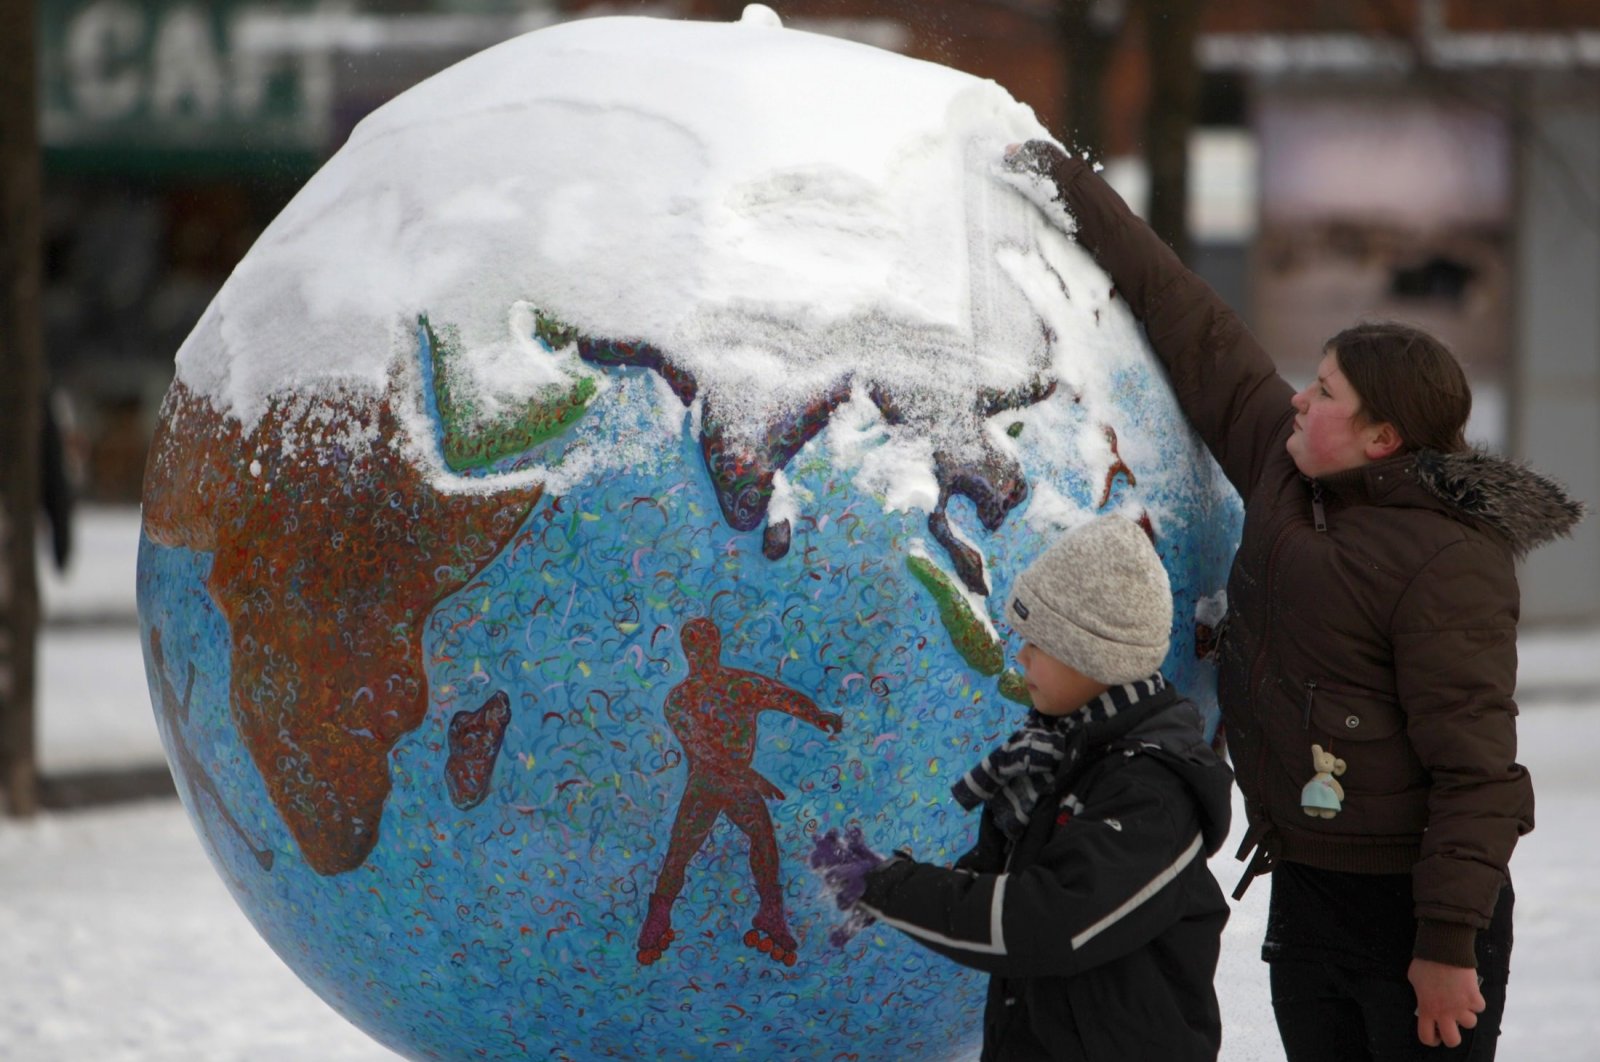 Children clean the snow from a globe in Copenhagen, Denmark, Dec. 17, 2009. (Reuters Photo)